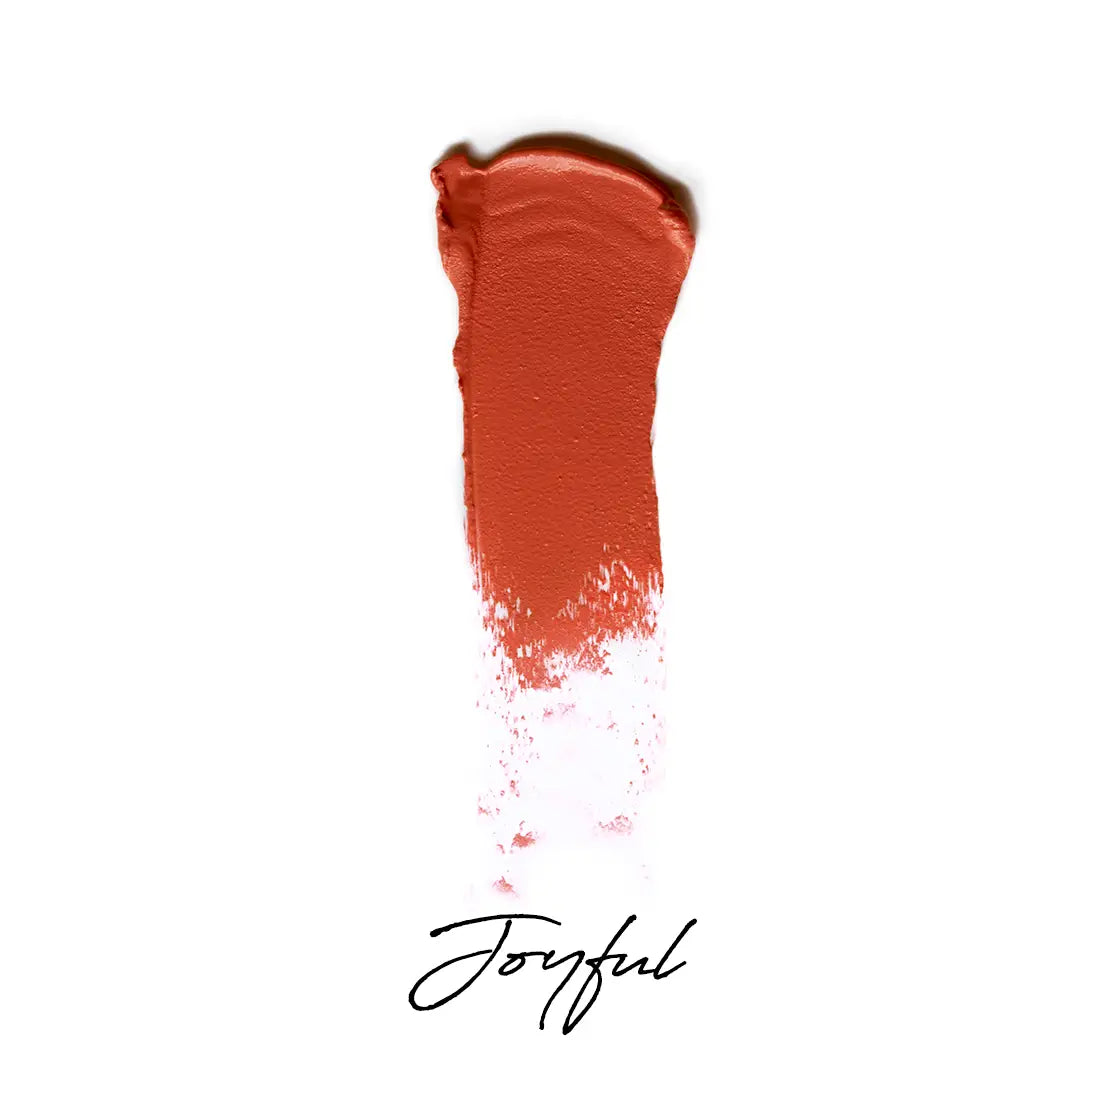 Kjaer Weis Cream Blush Refill - Joyful Free Shipping 